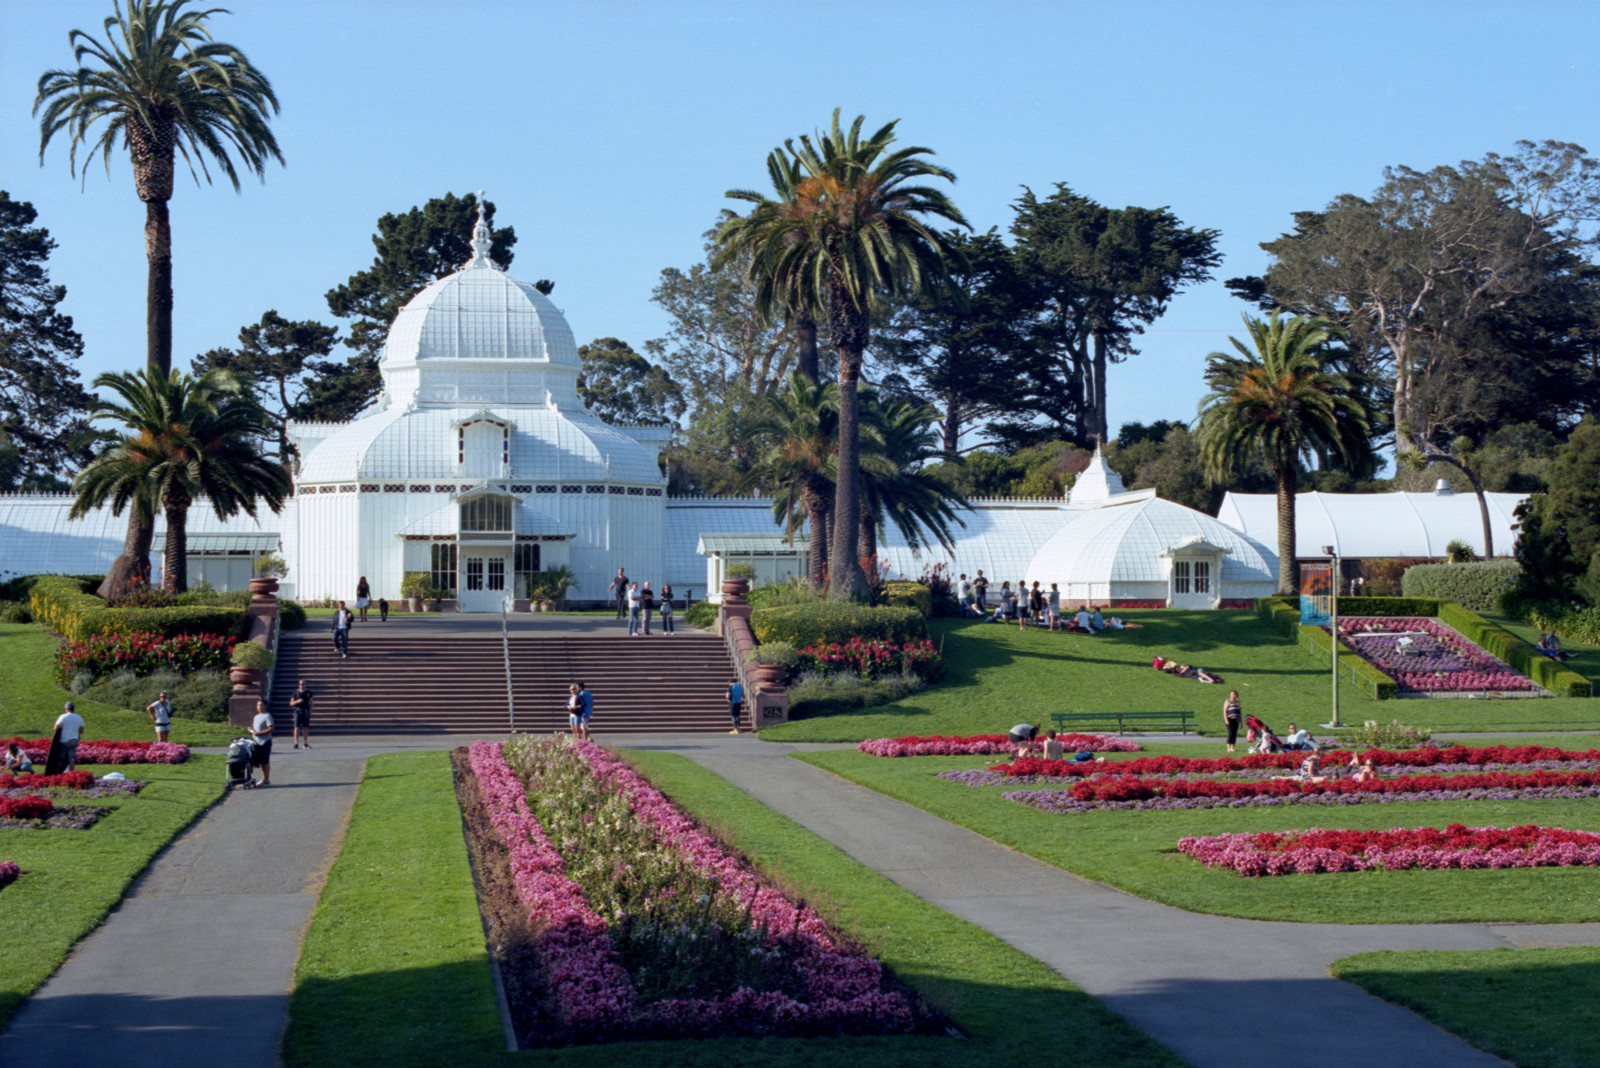 Hall of Flowers, Golden Gate Park, San Francisco.